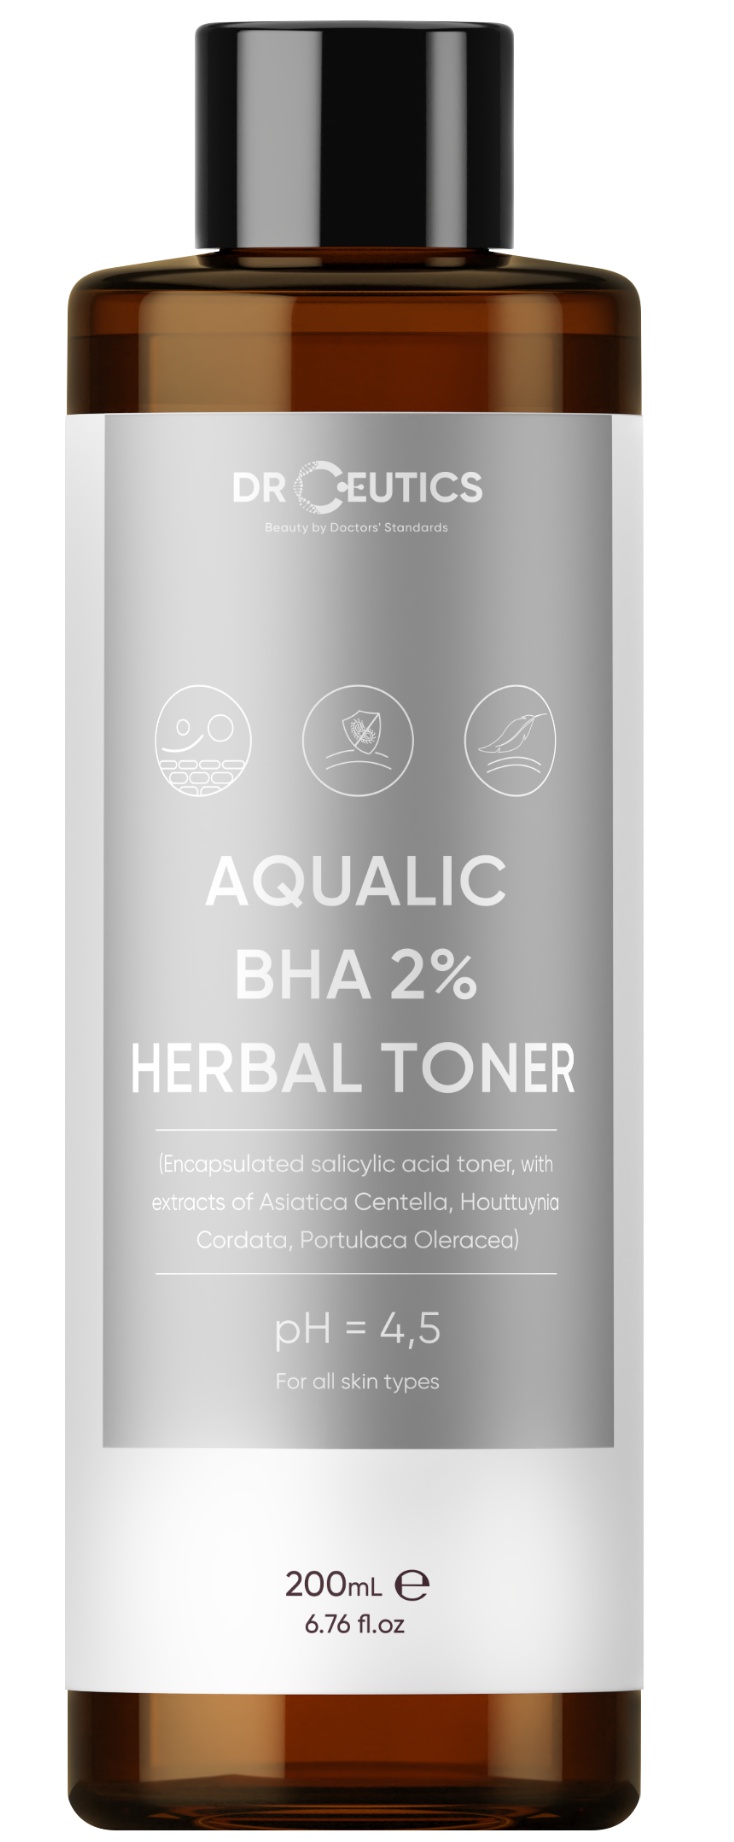 DrCeutics Aqualic BHA 2% Herbal Toner